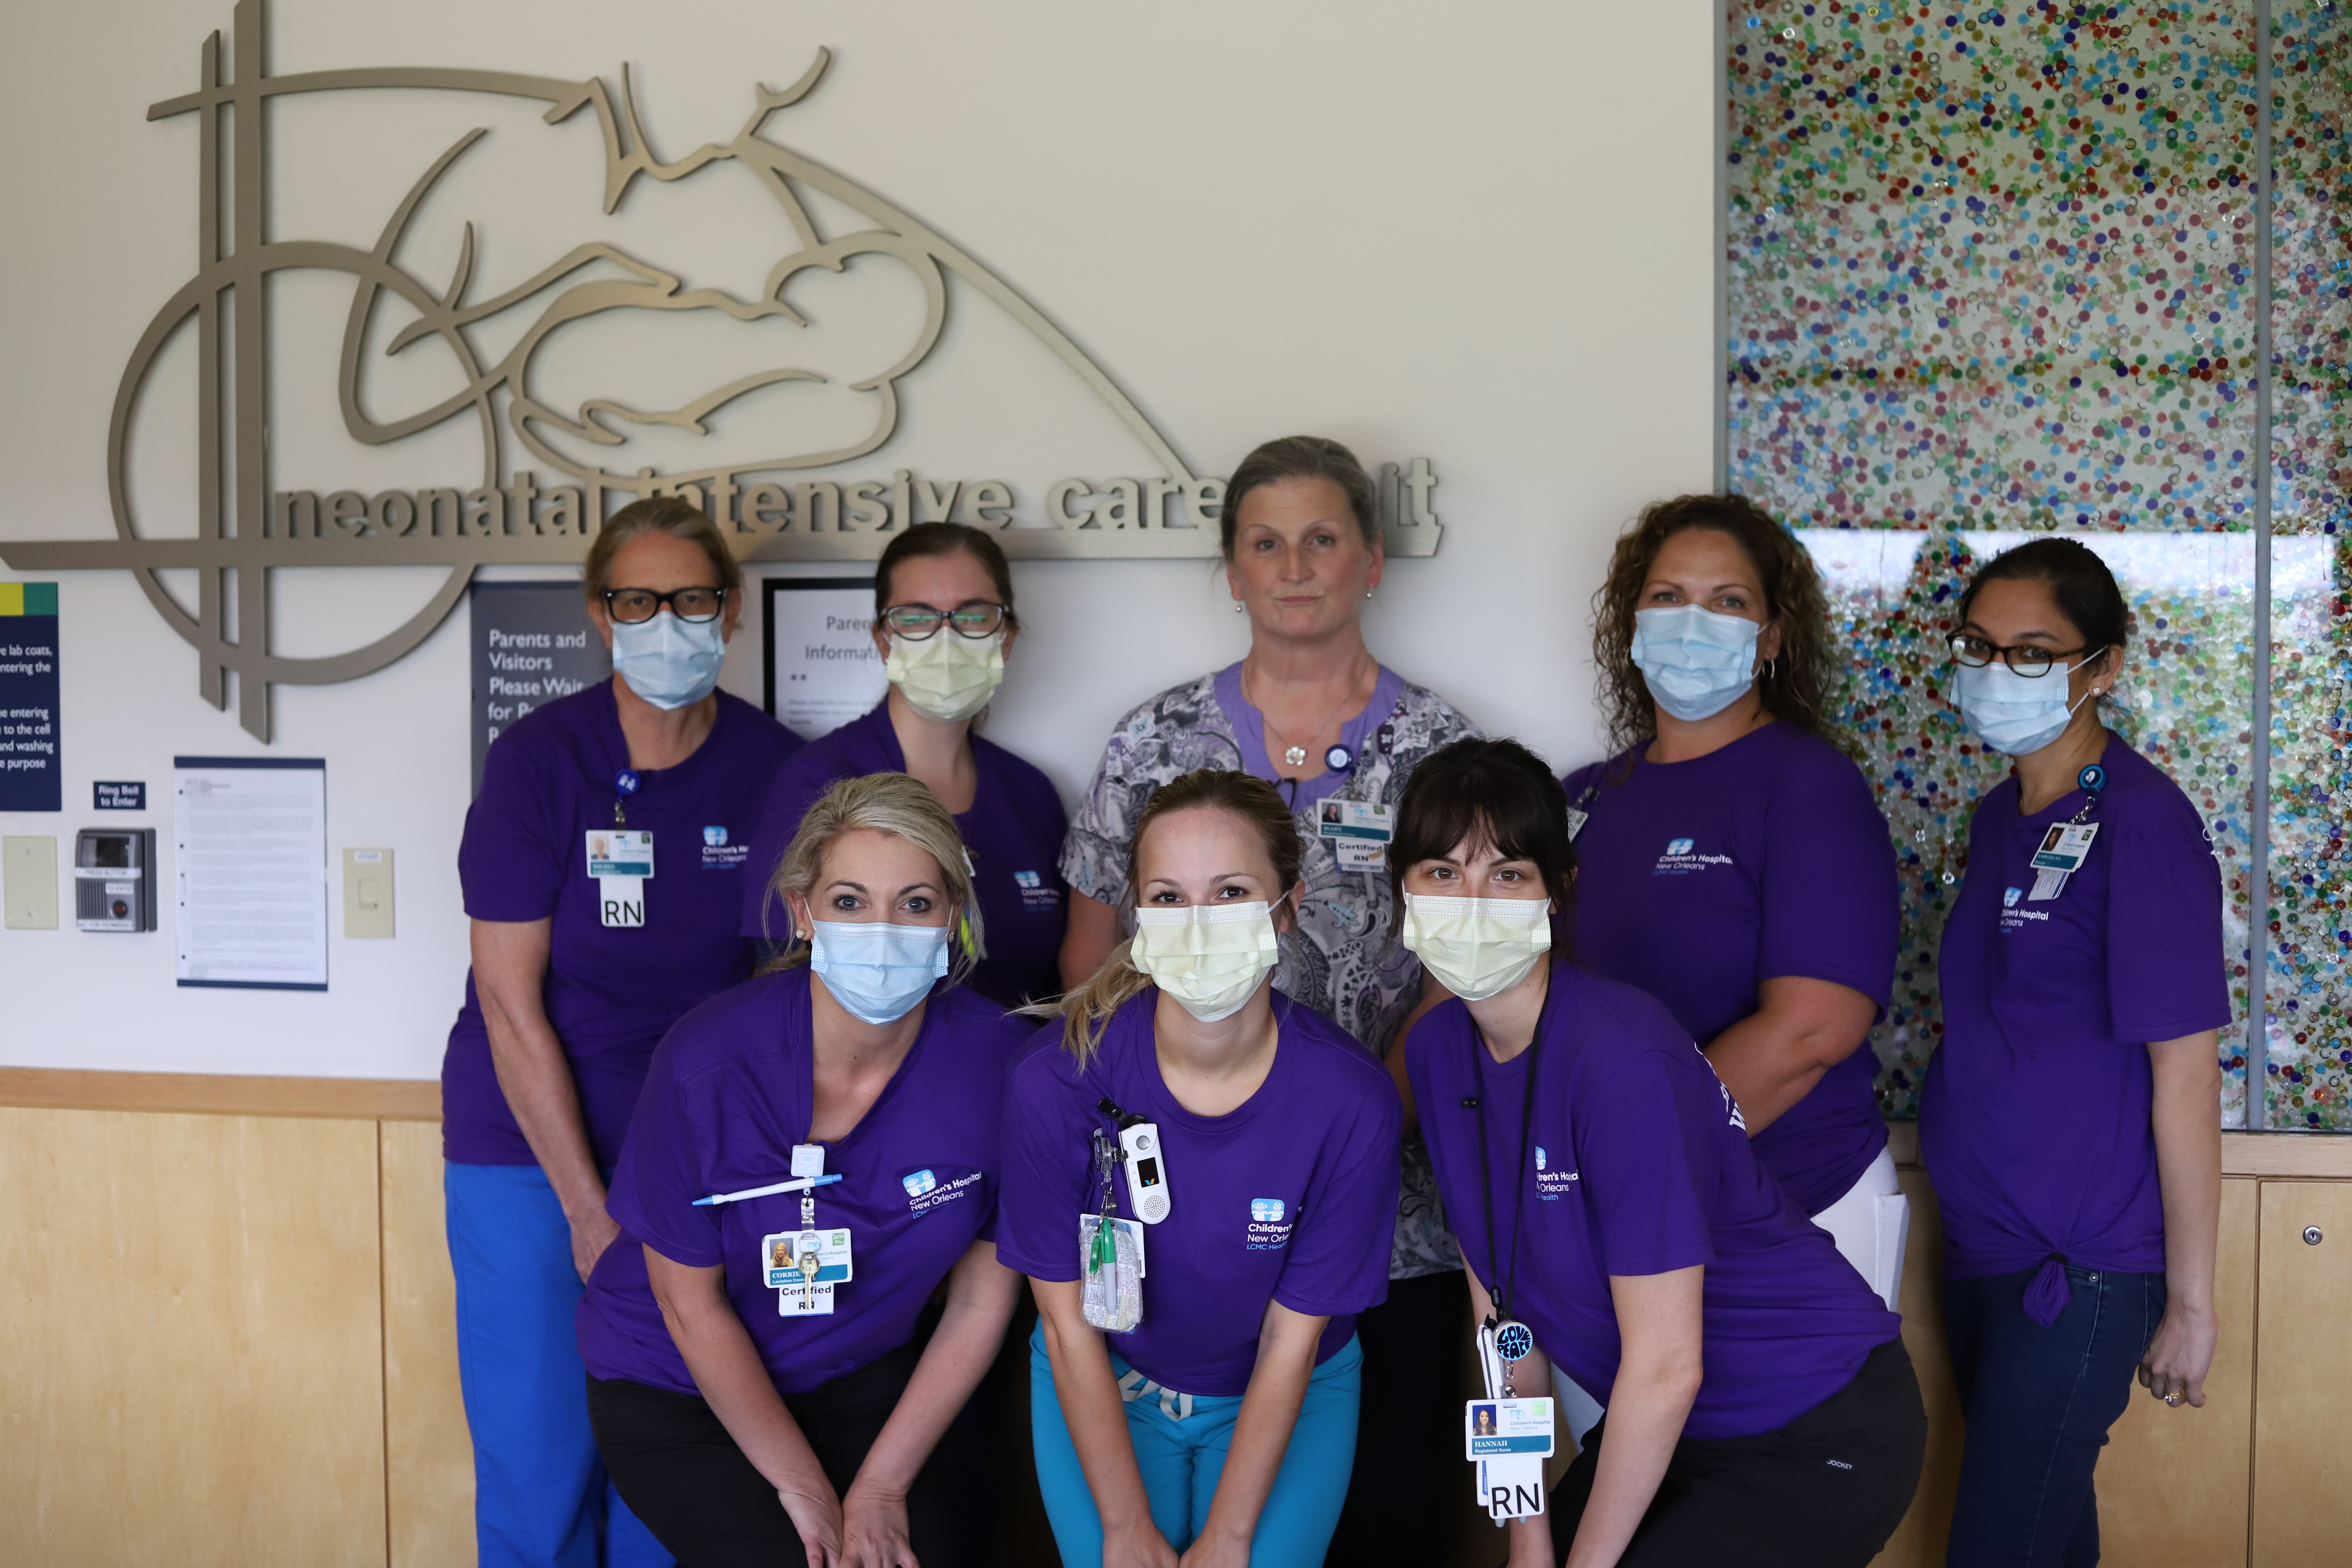 a group of nurses in purple uniform